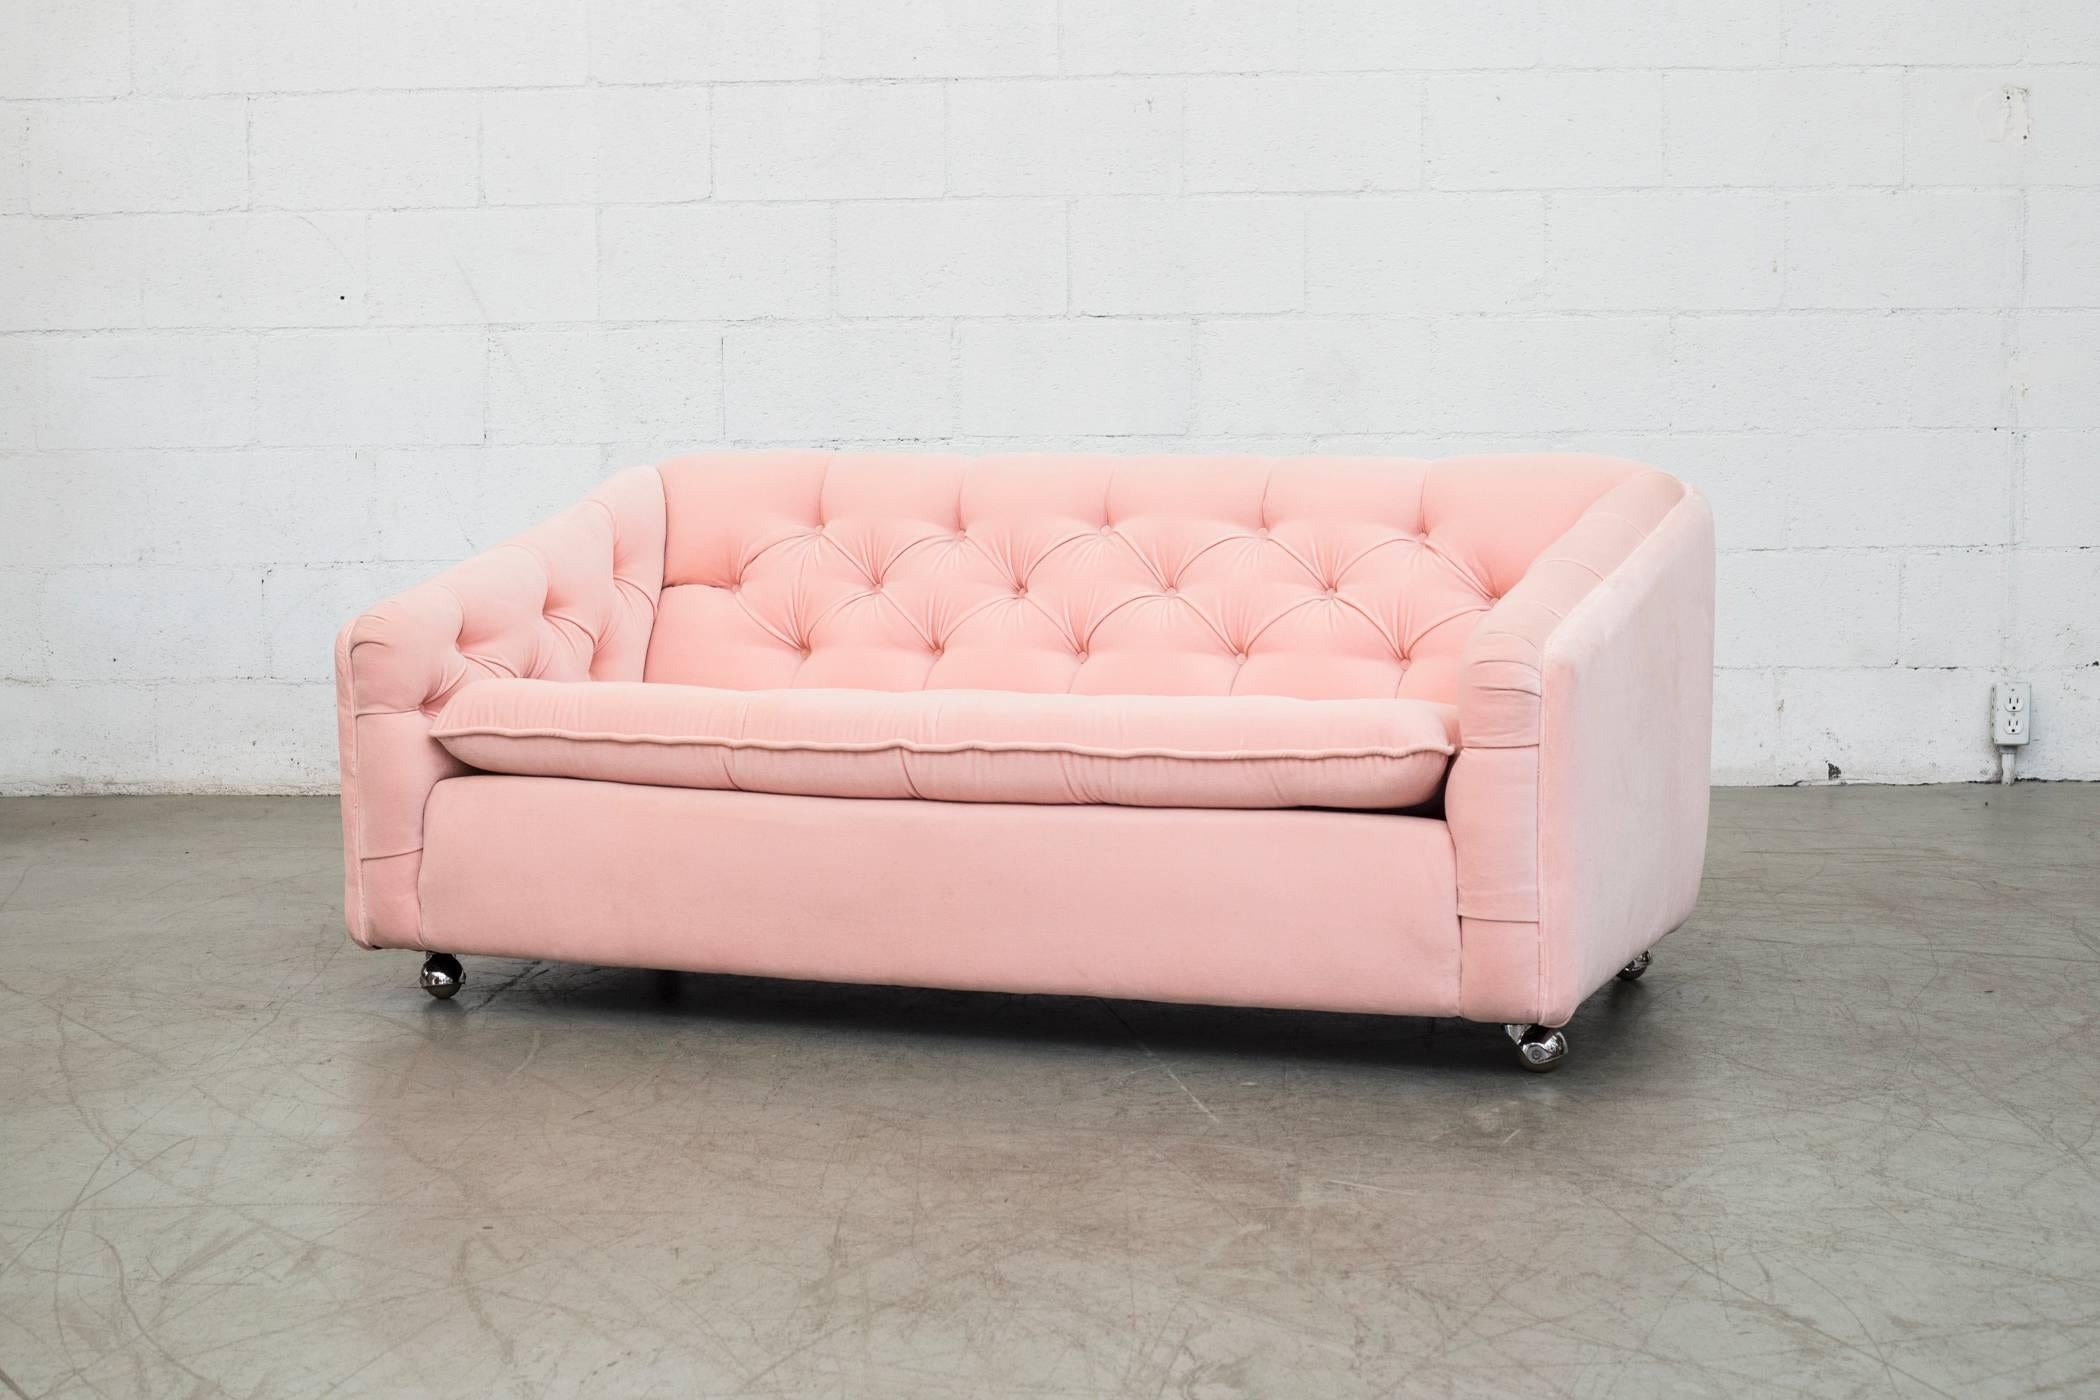 Sweet Little Geoffrey Harcourt for Artifort newly pink velvet upholstered two-seat loveseat on wheels.